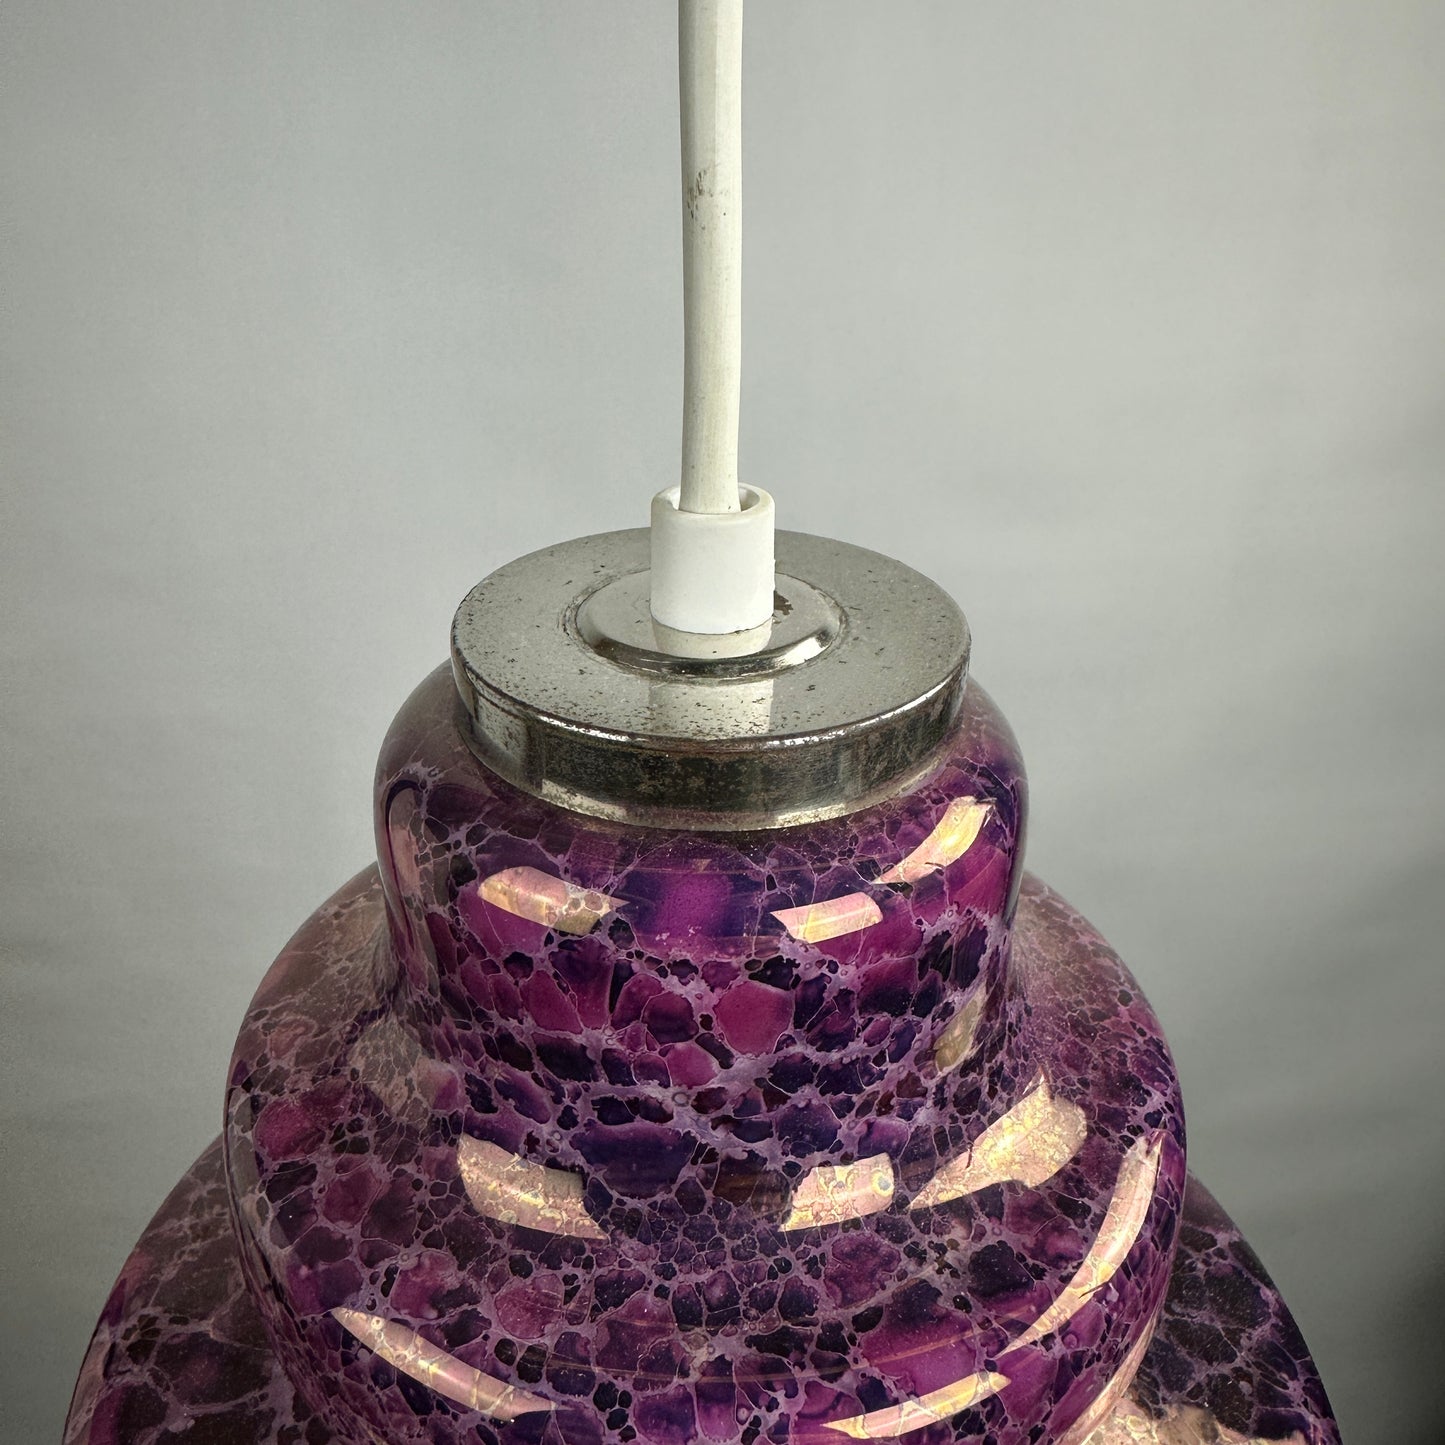 Purple snake skin pattern glass pendant light by Herda 1970